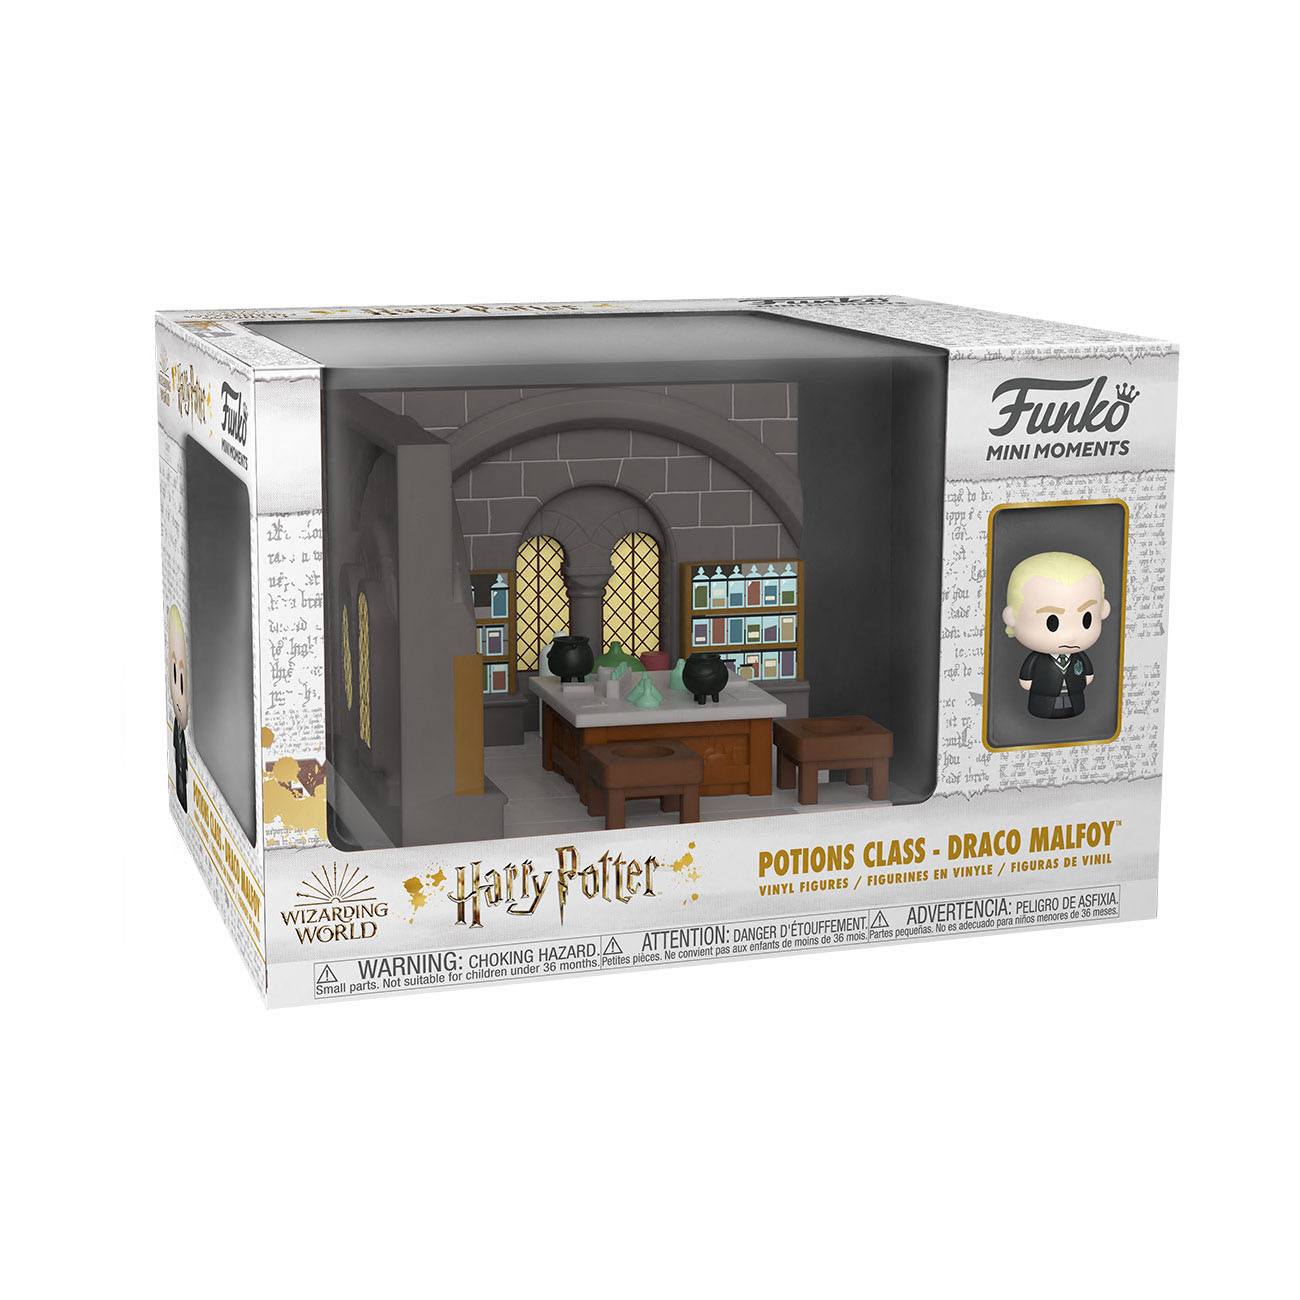 Funko Pop! Harry Potter Mini Moments - Tom Riddle - Draco Malfoy von Funko LLC